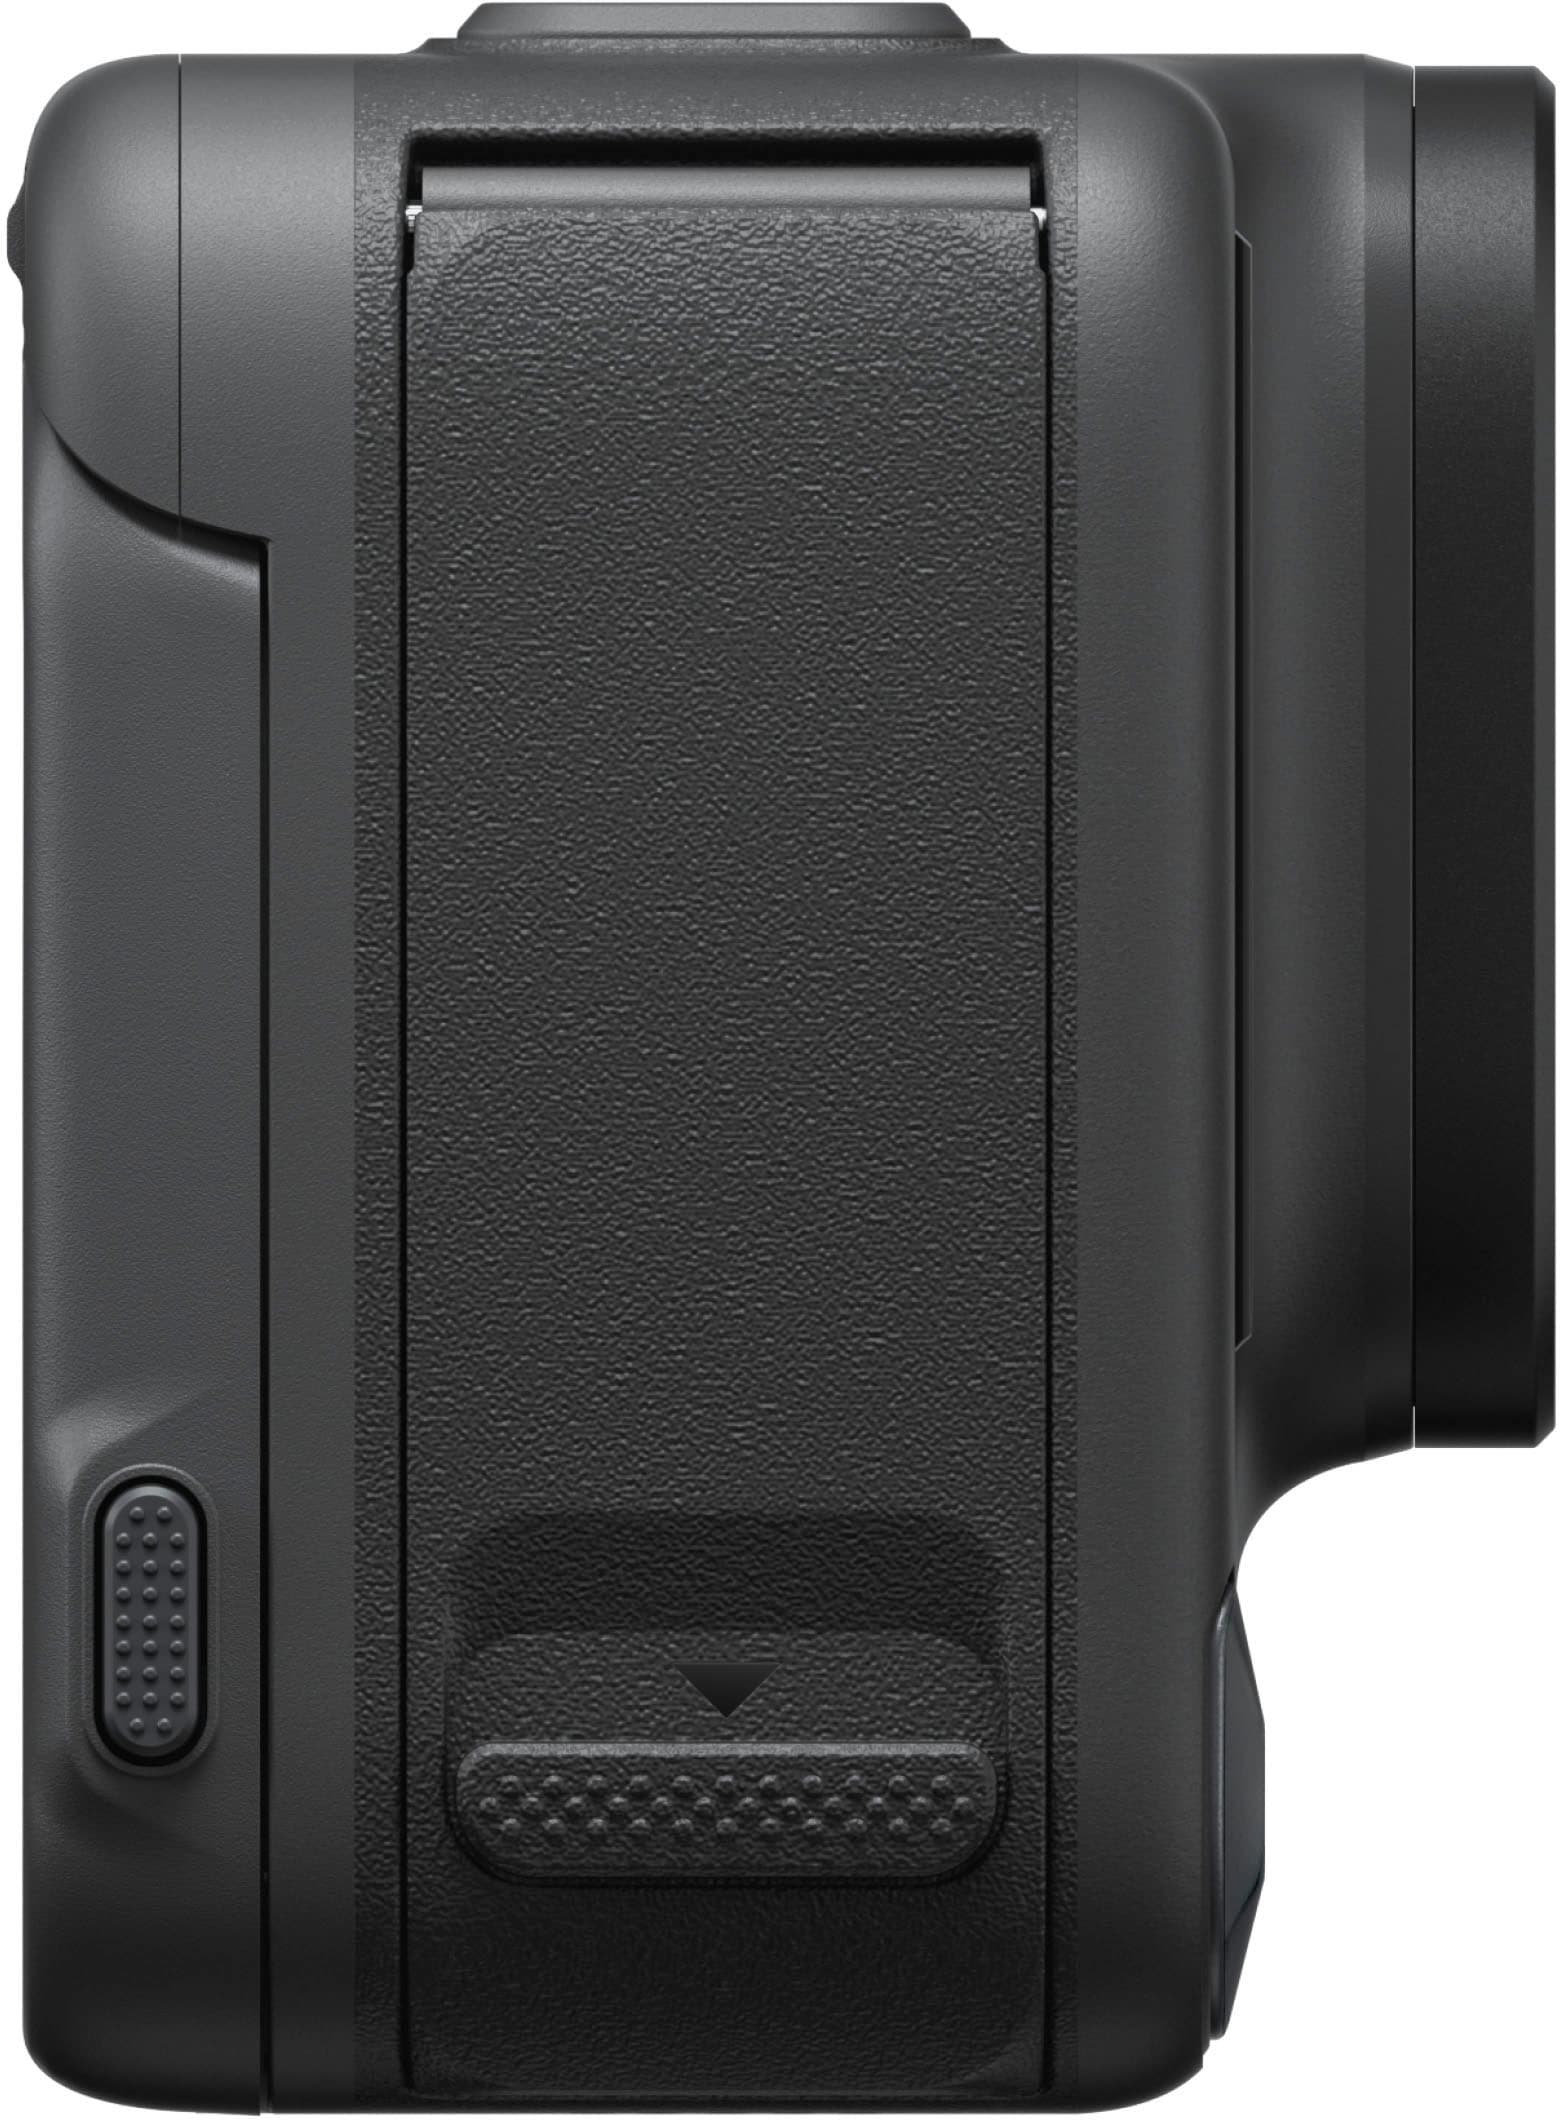 Insta360 Camcorder »Ace Pro«, 8K, WLAN (Wi-Fi)